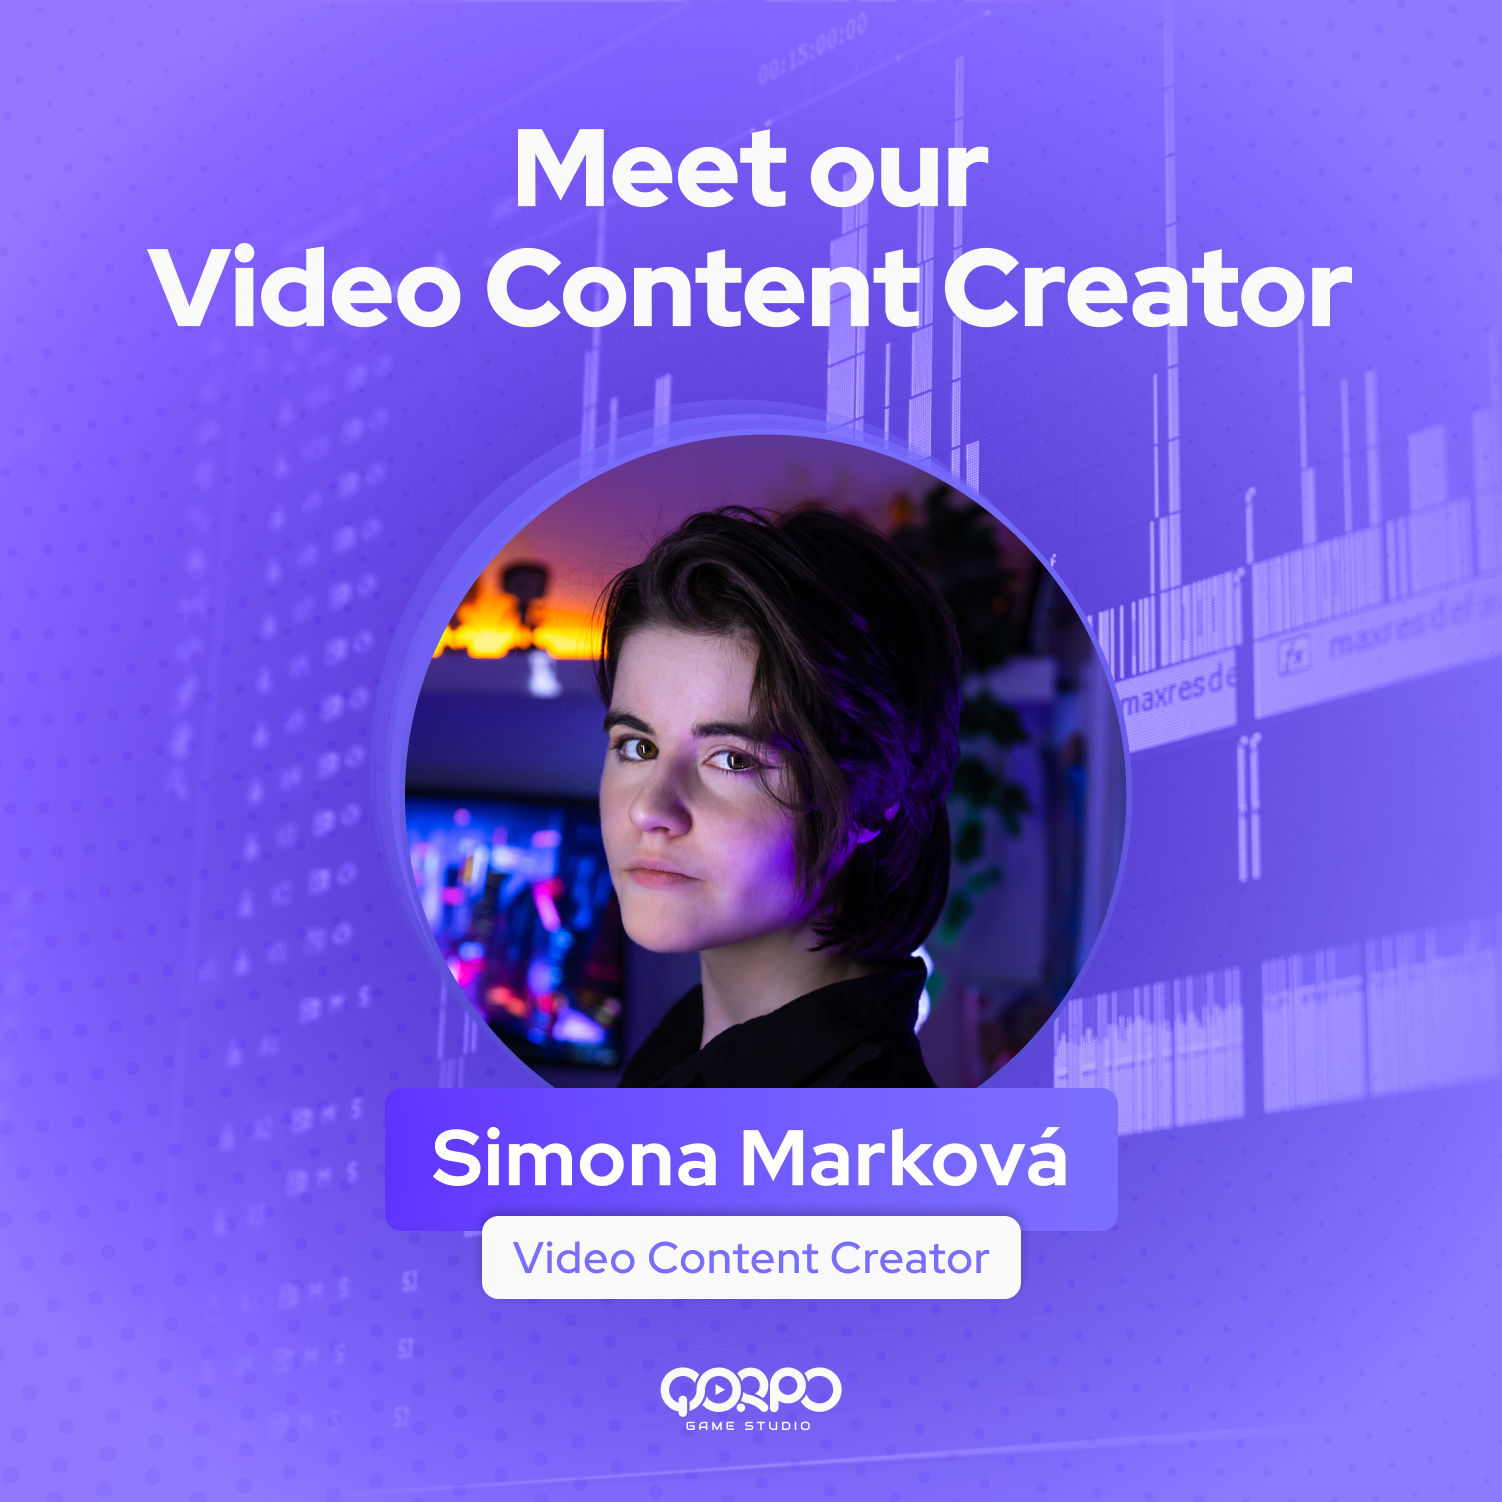 QORPO Insights: Meet our Video Content Creator, Simona Marková